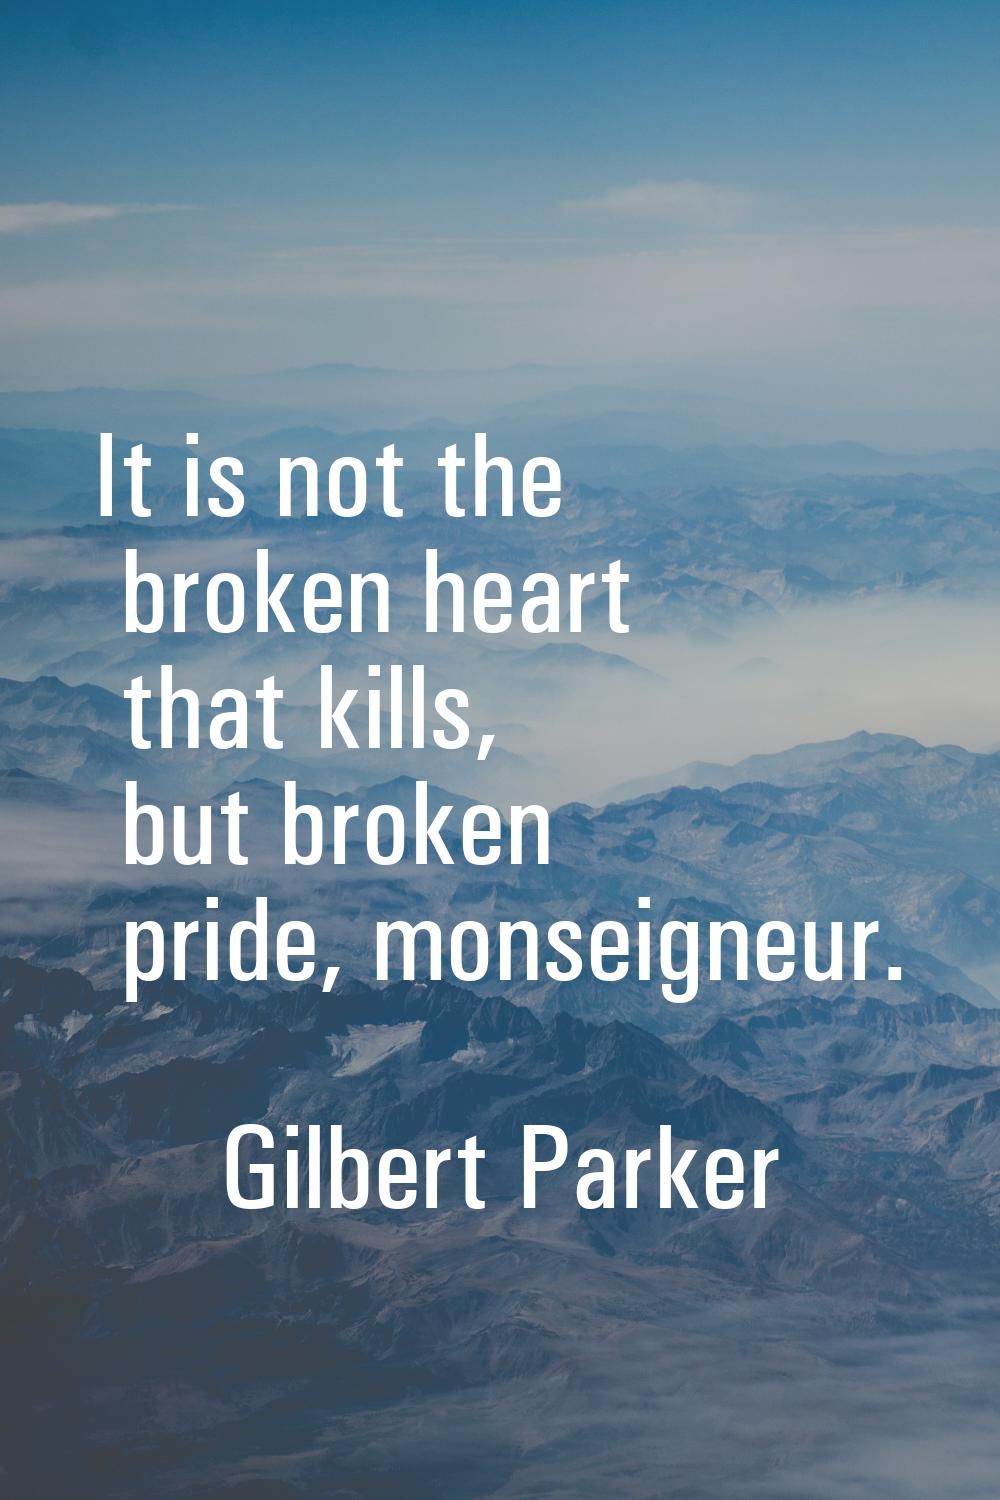 It is not the broken heart that kills, but broken pride, monseigneur.